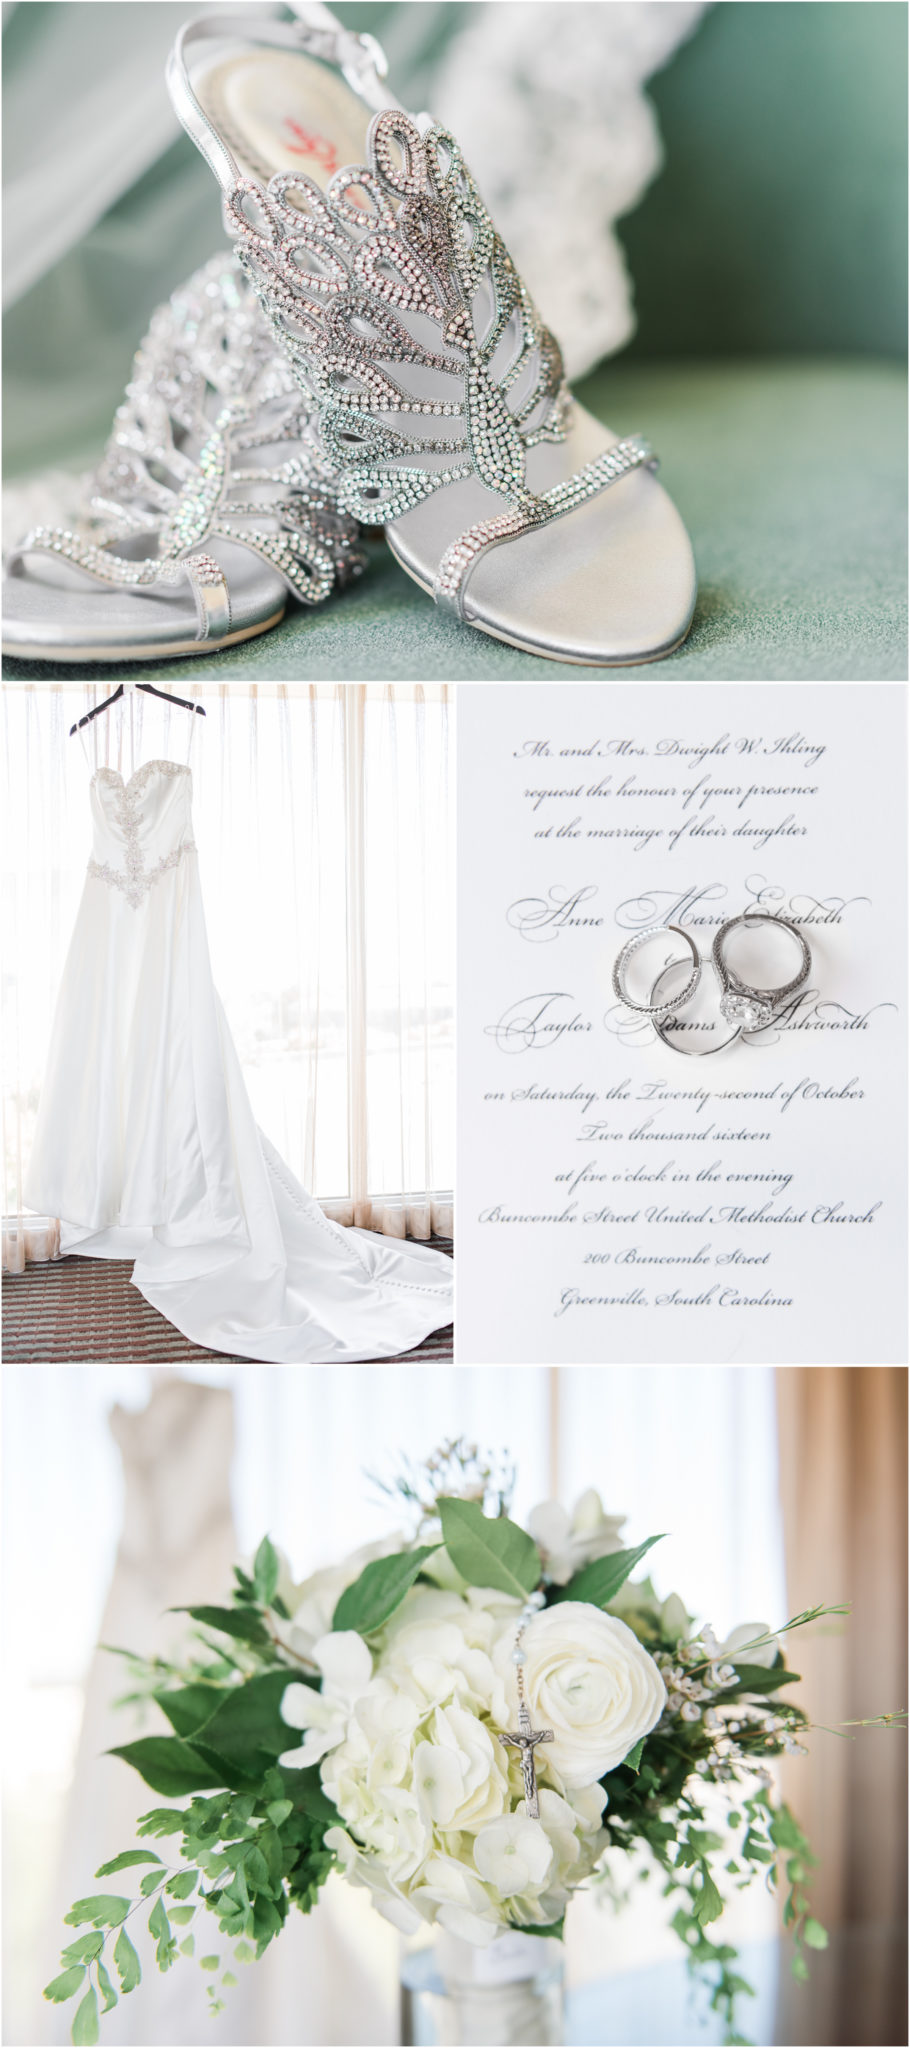 A Greenville South Carolina Commerce Club Wedding bridal details